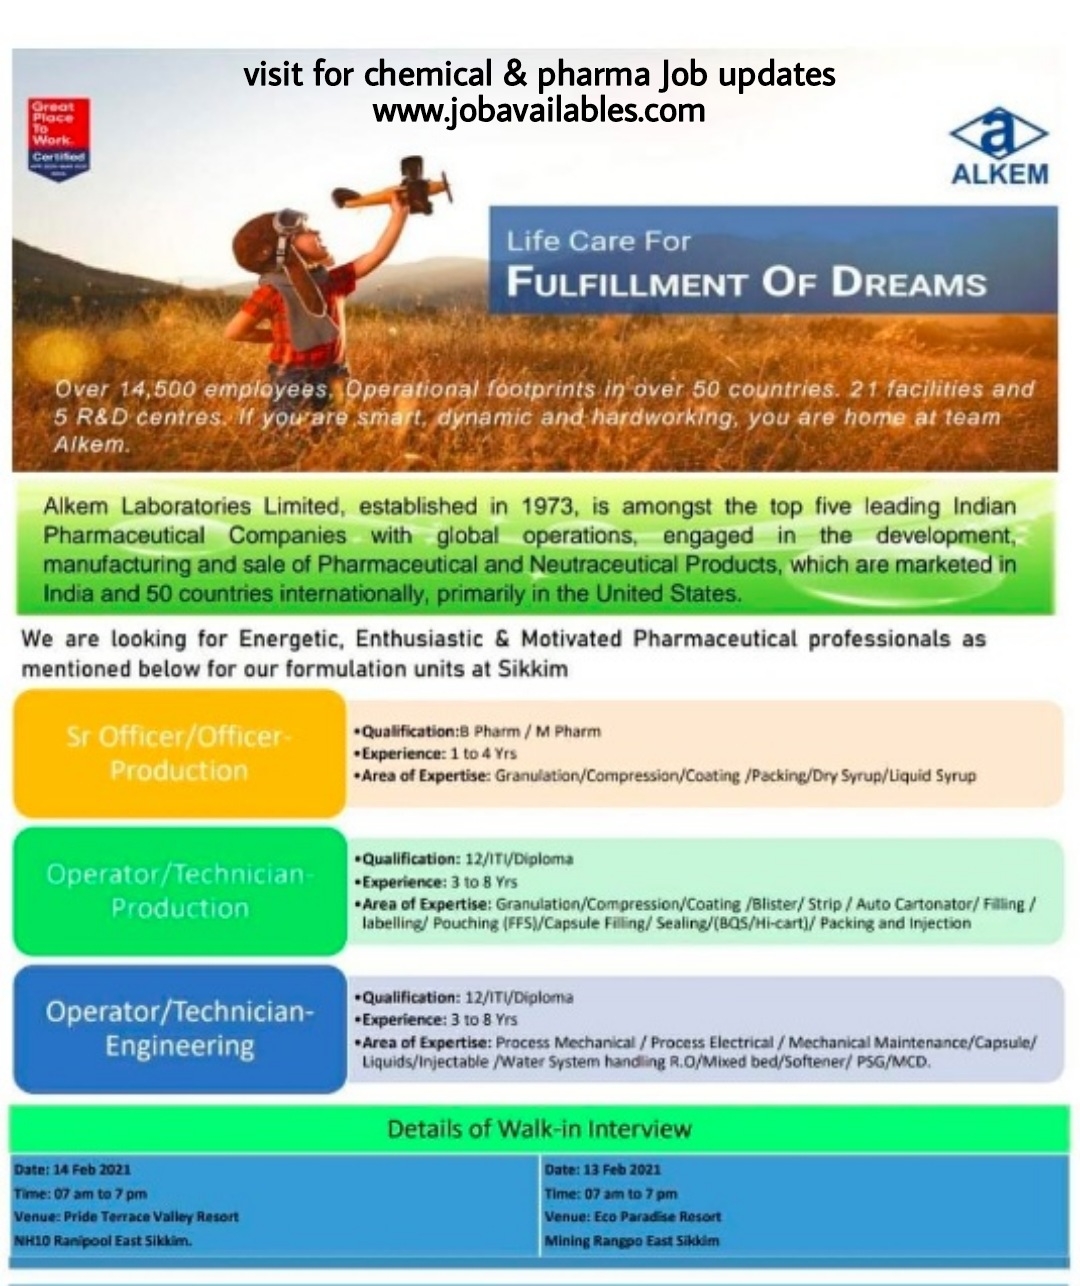 Job Availables, Alkem Laboratories Pvt Ltd Job Opening For M.Pharma/ B.Pharma/ ITI/ Diploma - Production/ Engineering Dept